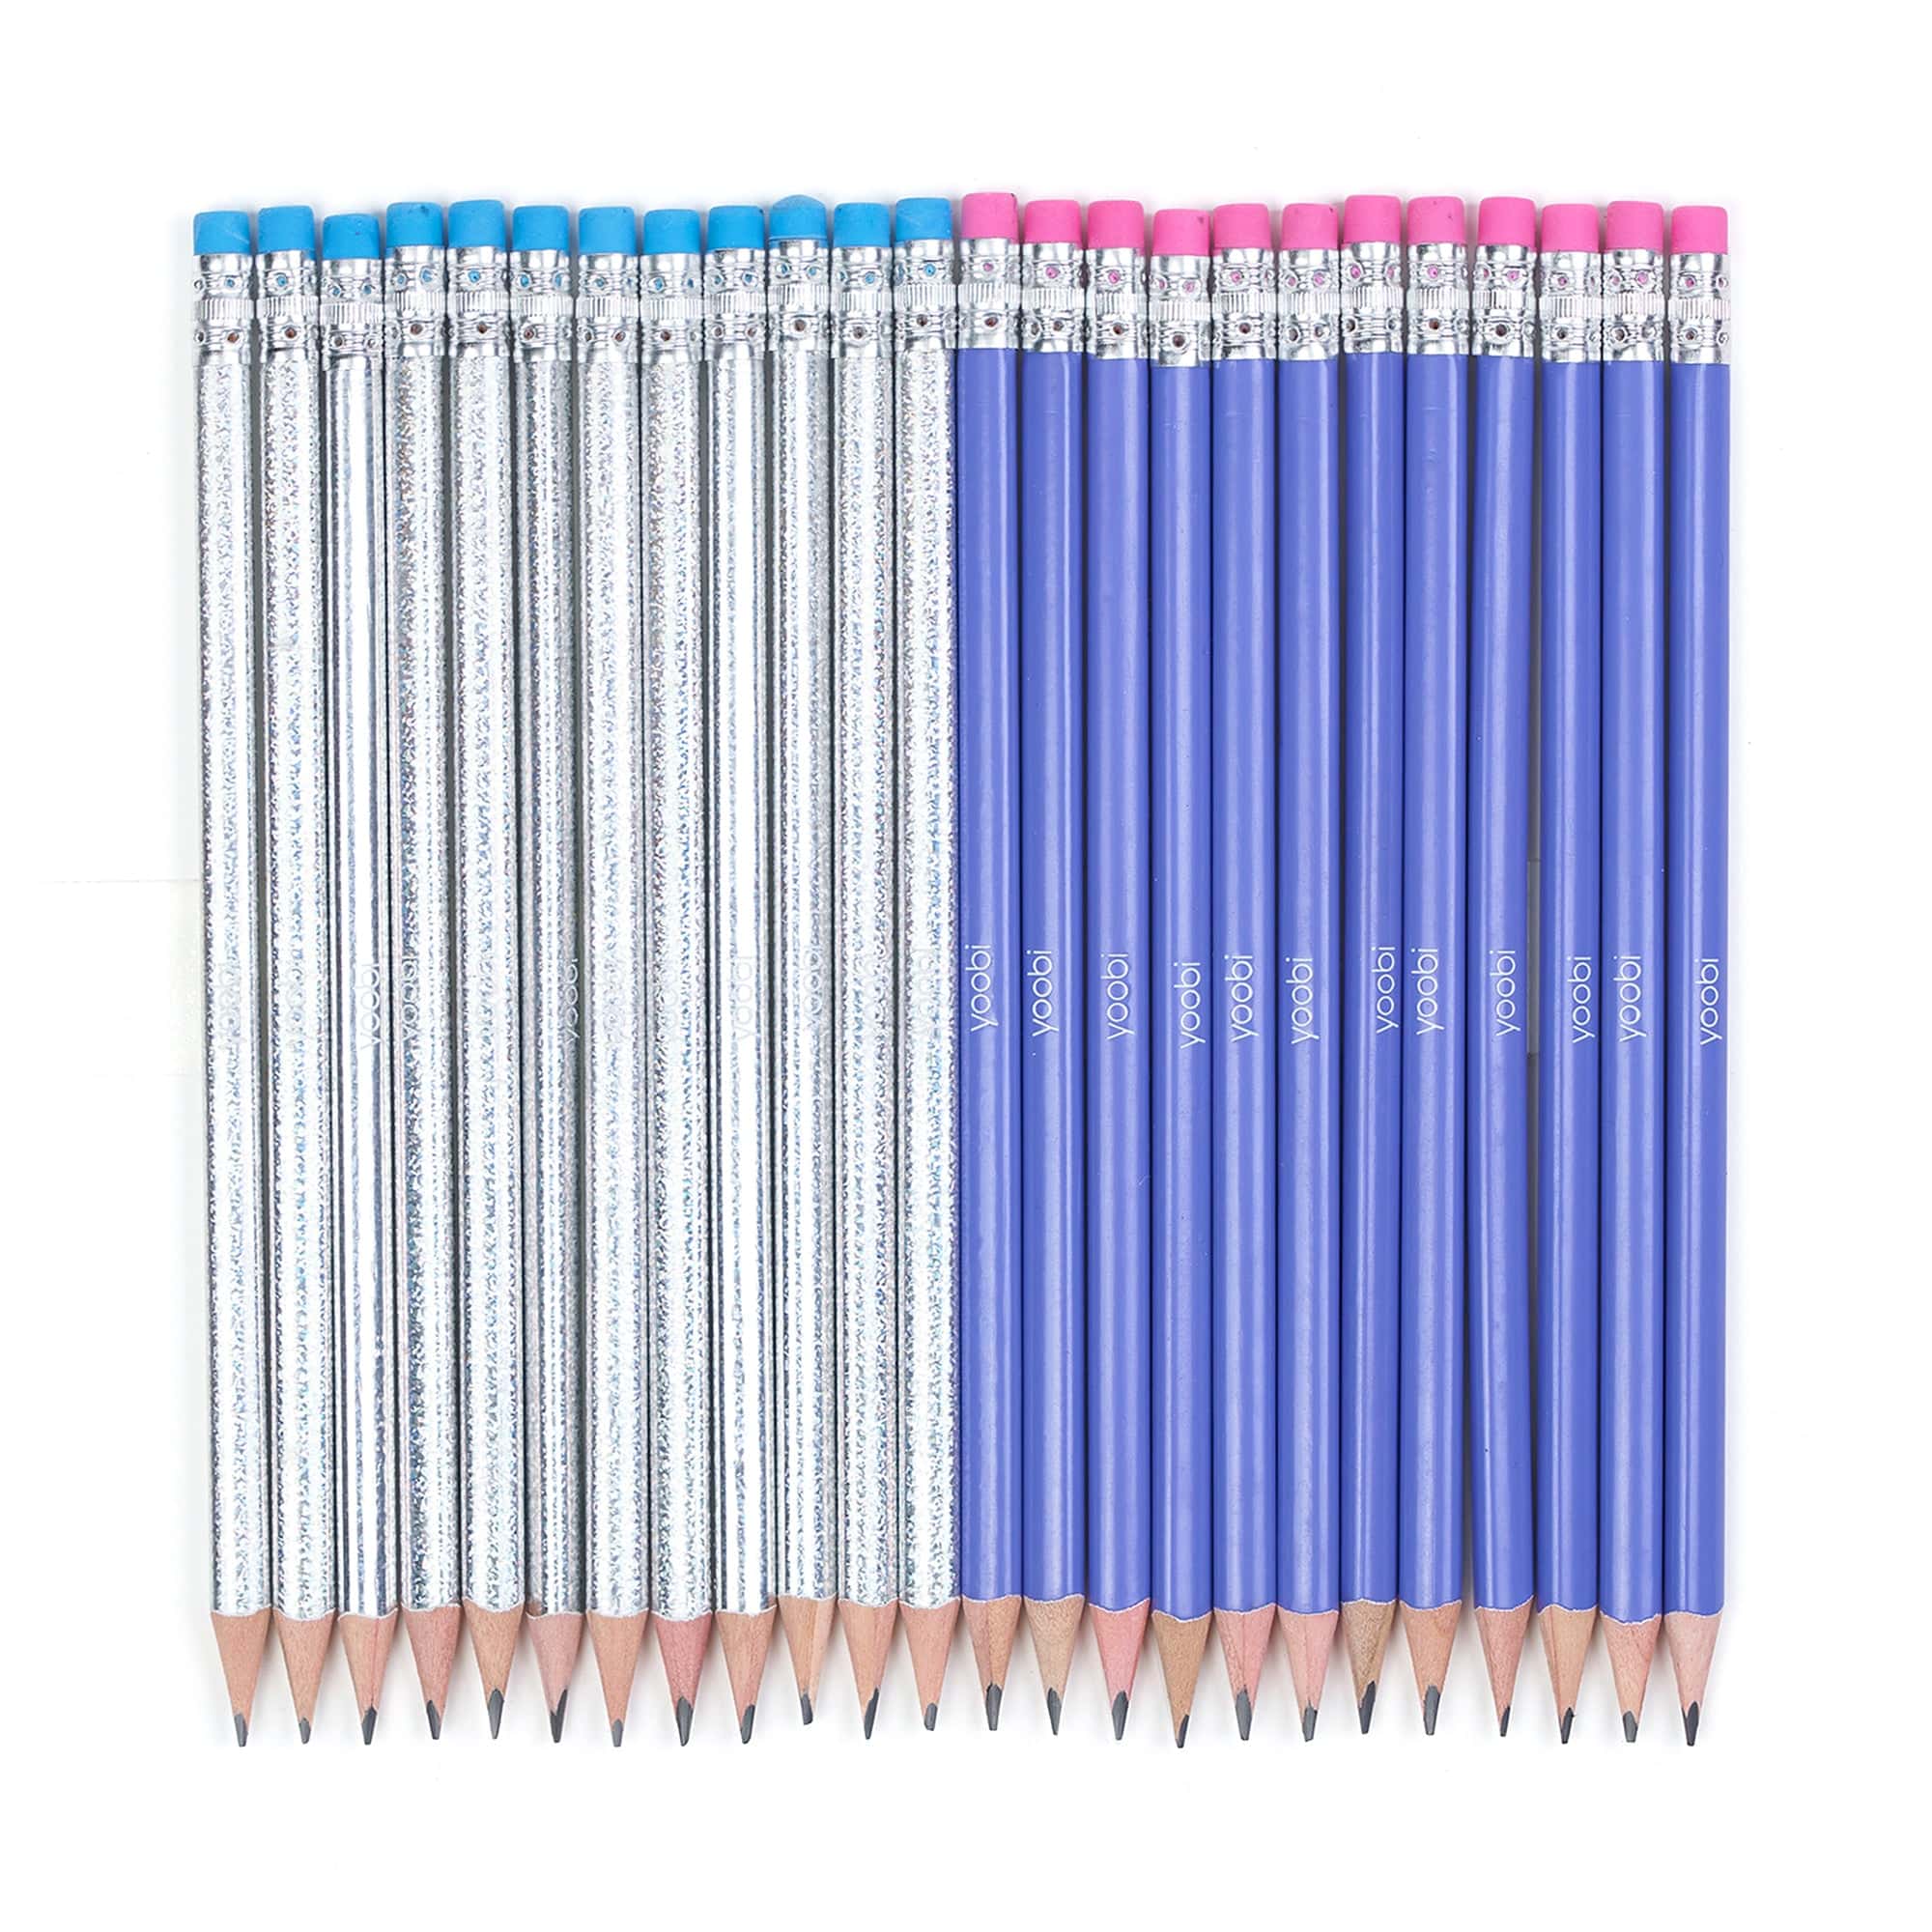 Yoobi #2 Pencils - Pre-Sharpened Pencils in Cute Pastel Colors - Pink,  Lavender, Yellow, Mint Green, Baby Blue & Peach - Fun School & Office  Supplies